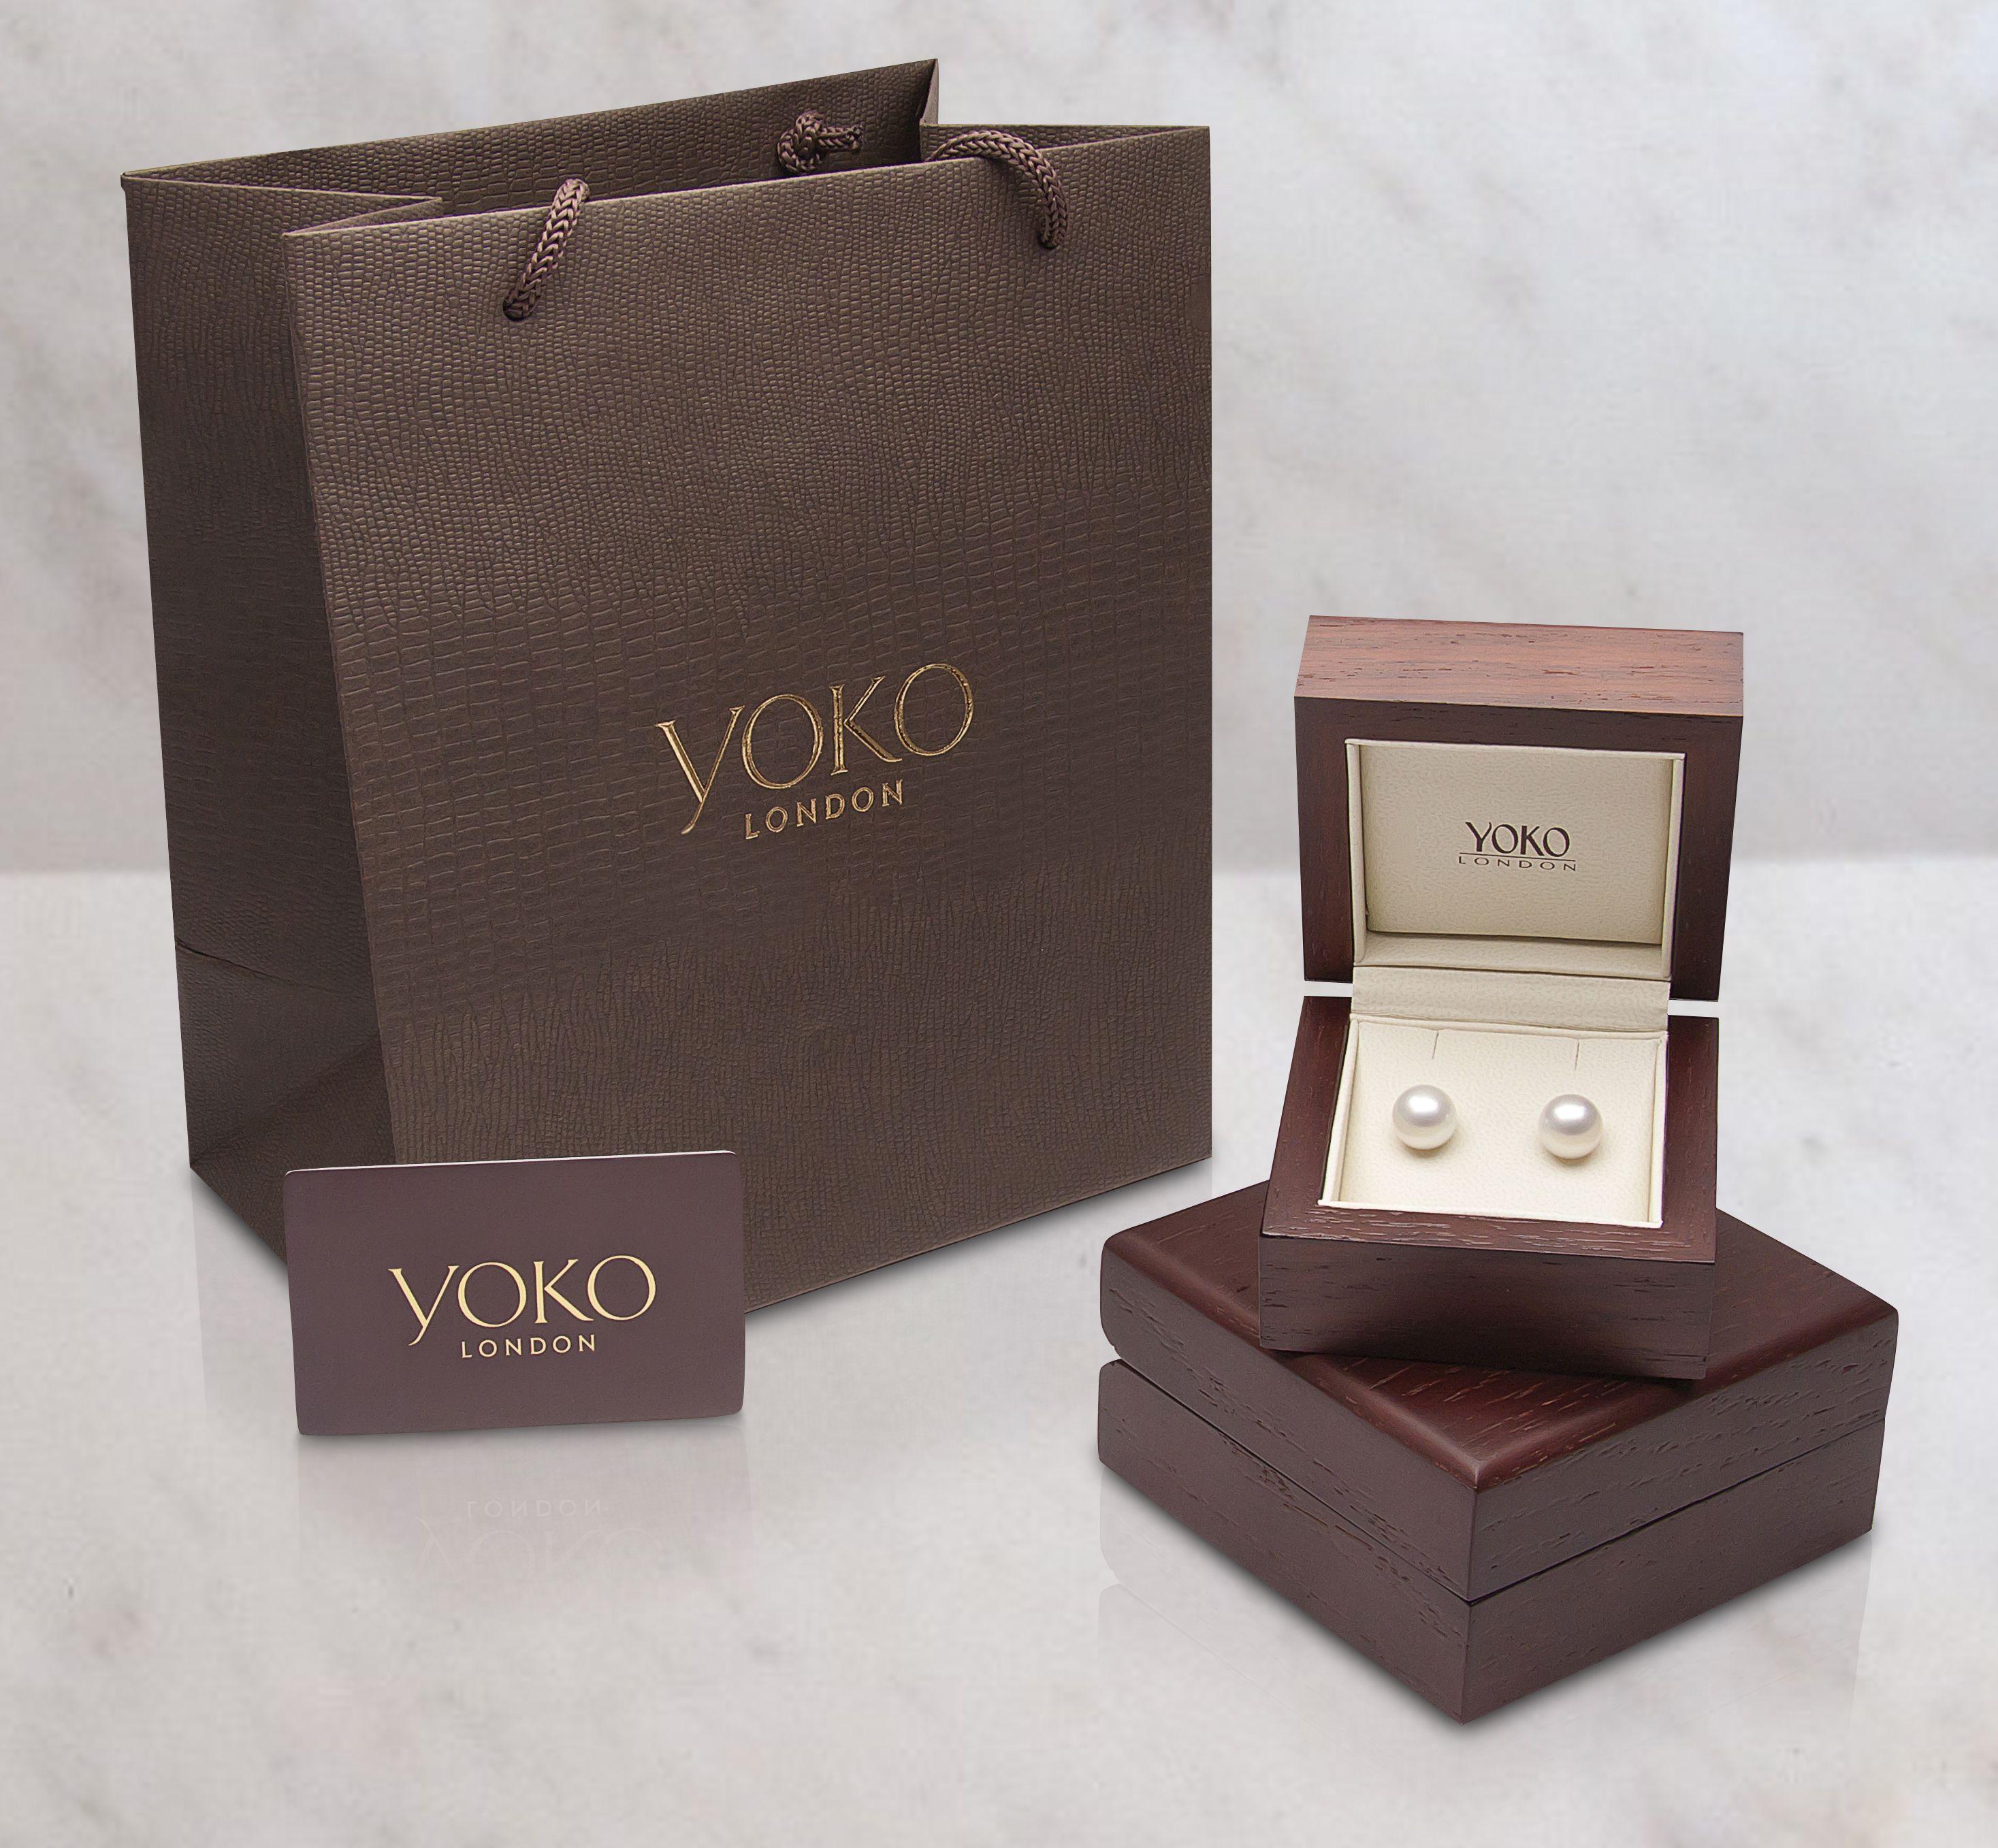 Yoko London South Sea Pearl and Diamond Earrings in 18 Karat White Gold 1